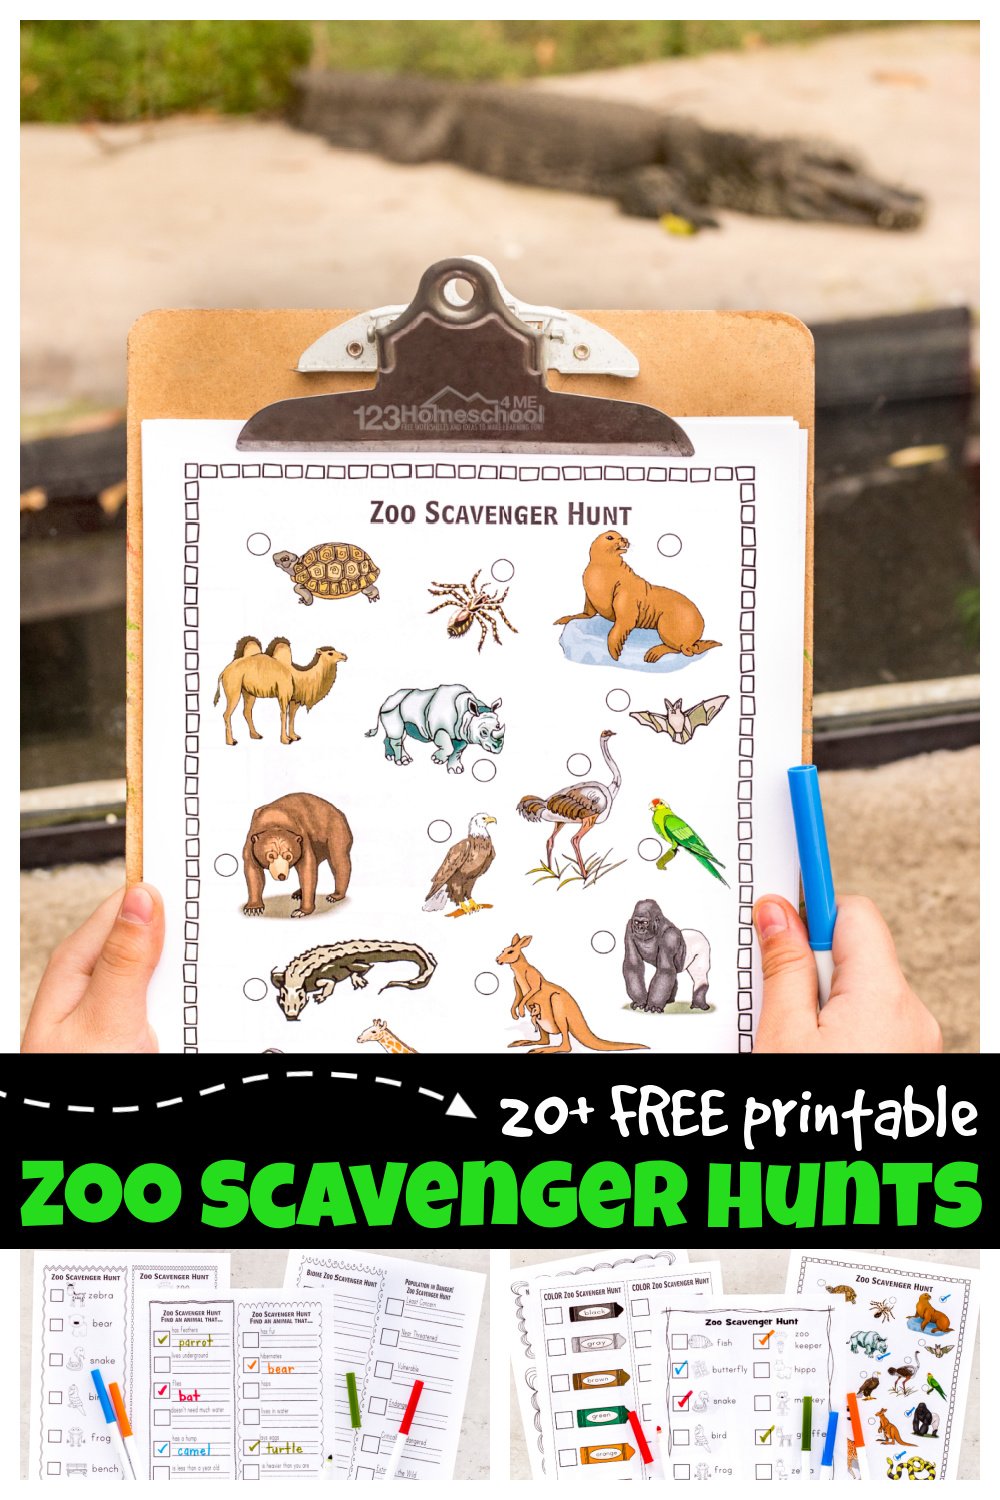 20+ FREE Zoo Scavenger Hunt Printables for Kids